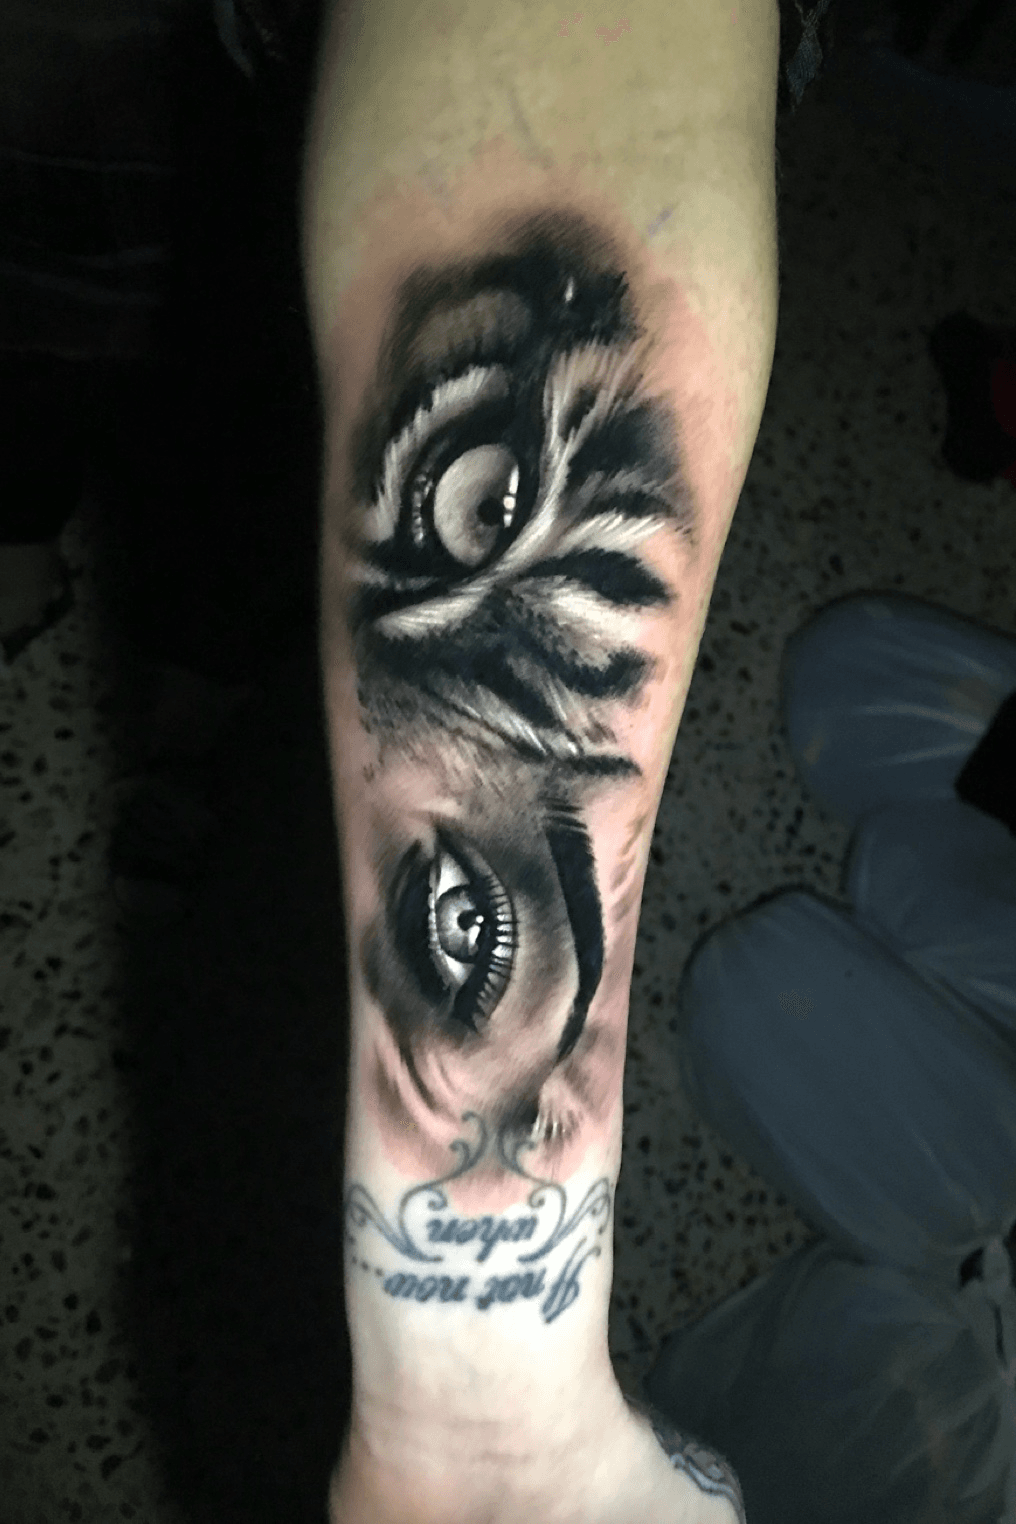 Tattoo uploaded by Jackson May • Tiger eye woman eye • Tattoodo